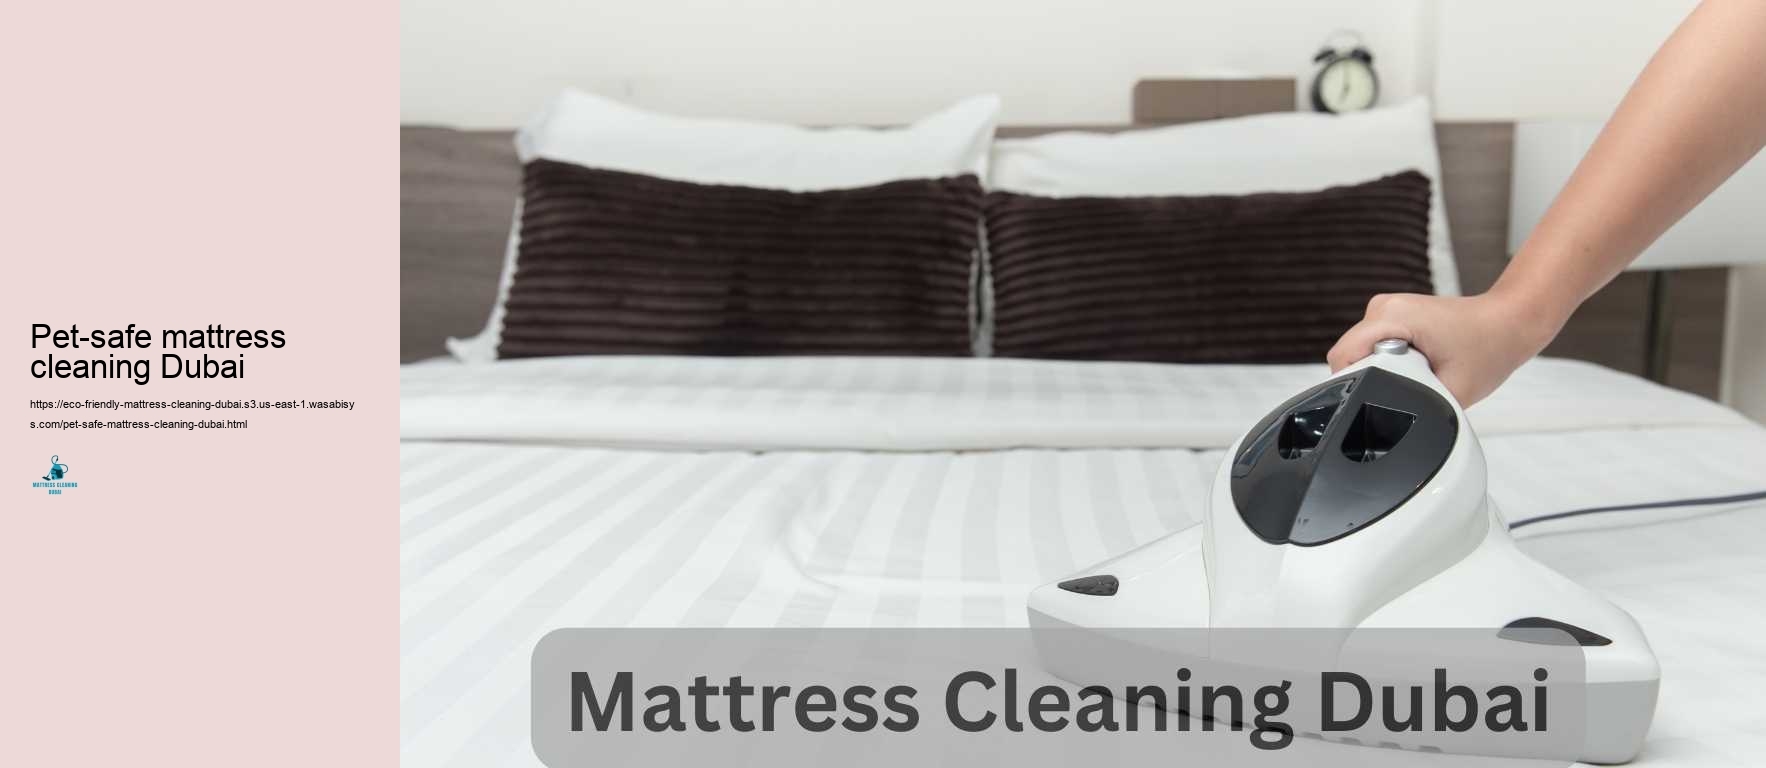 Pet-safe mattress cleaning Dubai